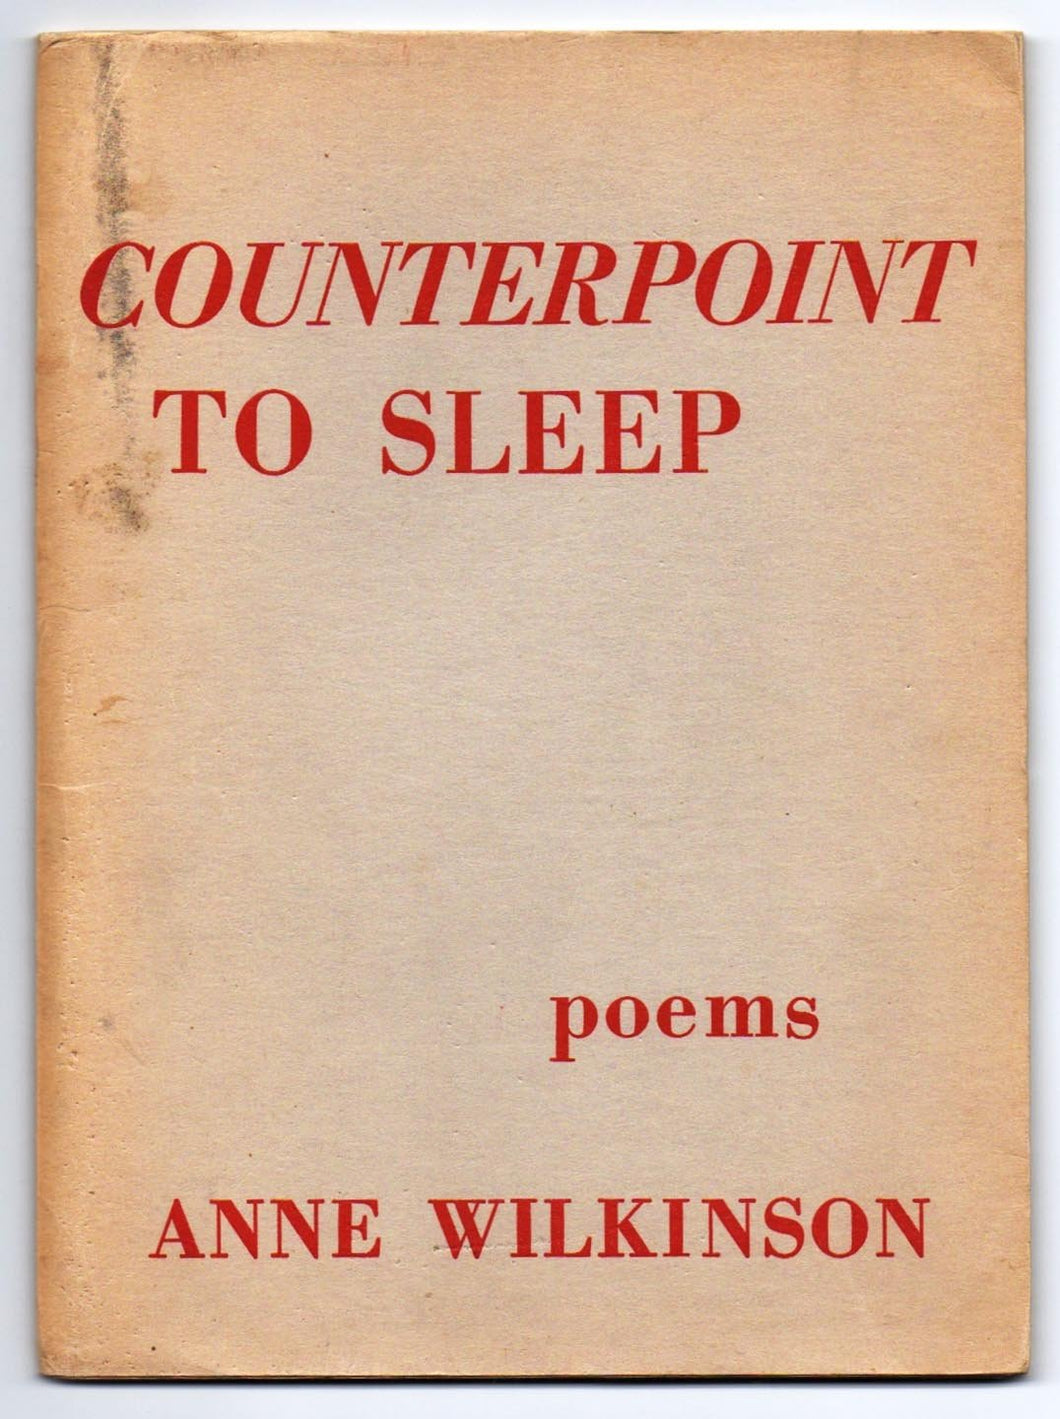 Counterpoint To Sleep